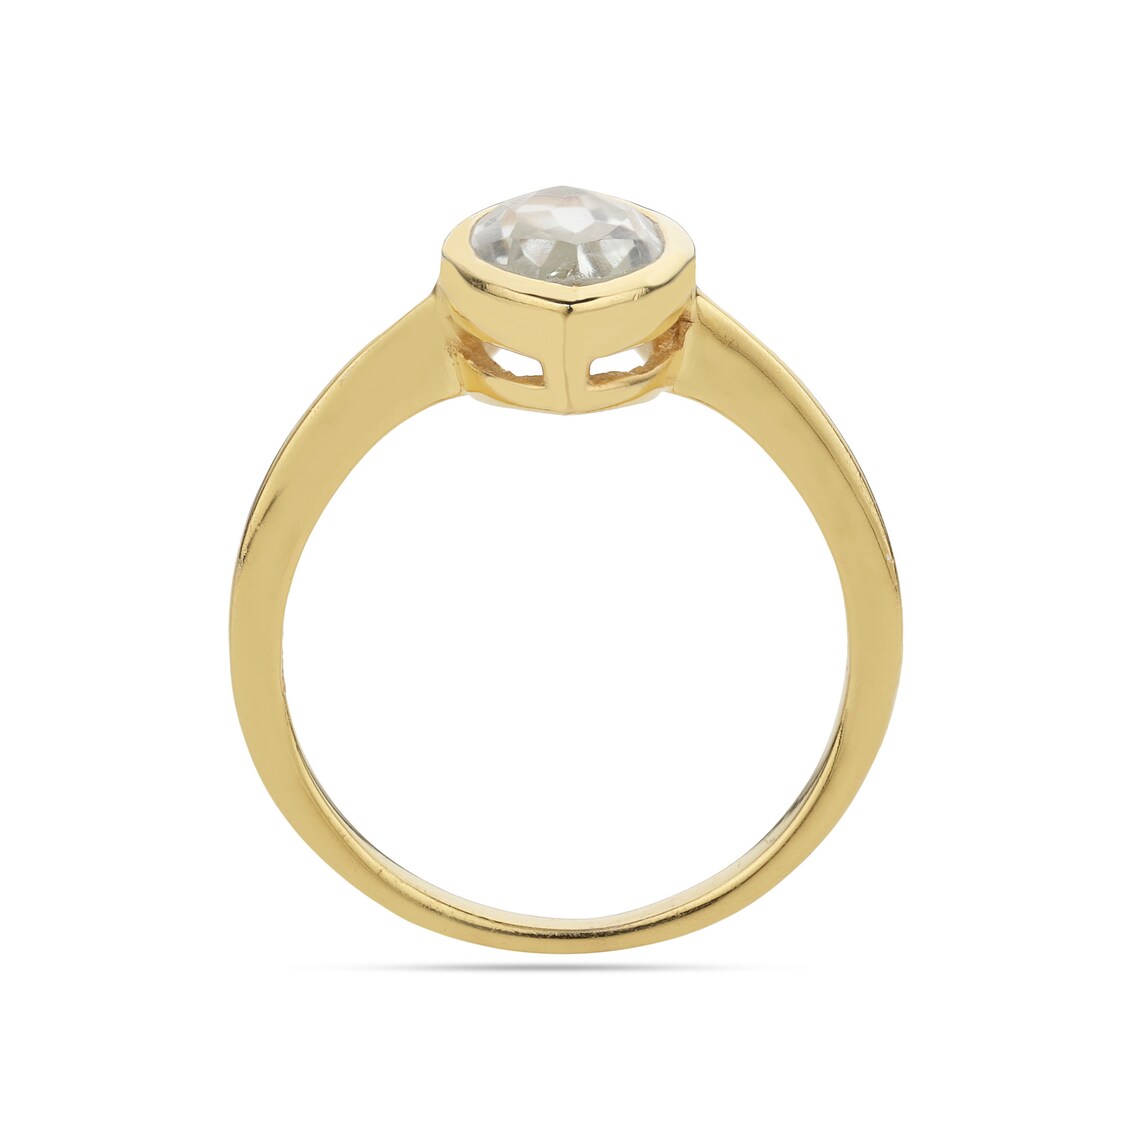 Green Amethyst Ring, Marquise Shape Amethyst Ring - Green Amethyst Gemstone Ring, 925 Sterling Silver Gold Ring